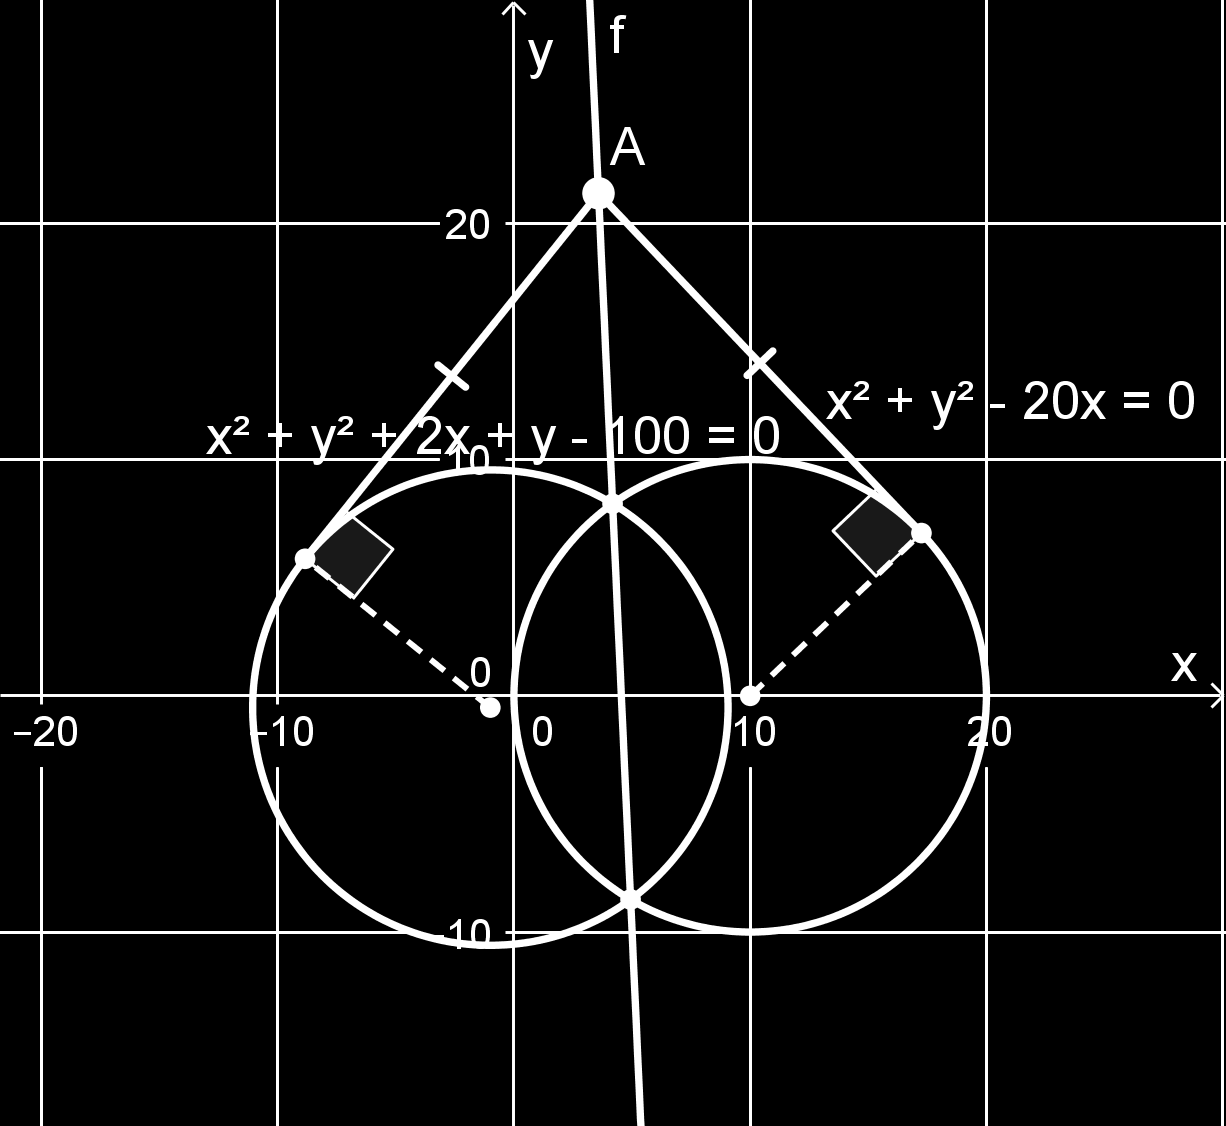 303 a) Ympyrät x + y + x + y 100 = 0 ja x + y 0x = 0 leikkaavat toisensa kahdessa pisteessä.